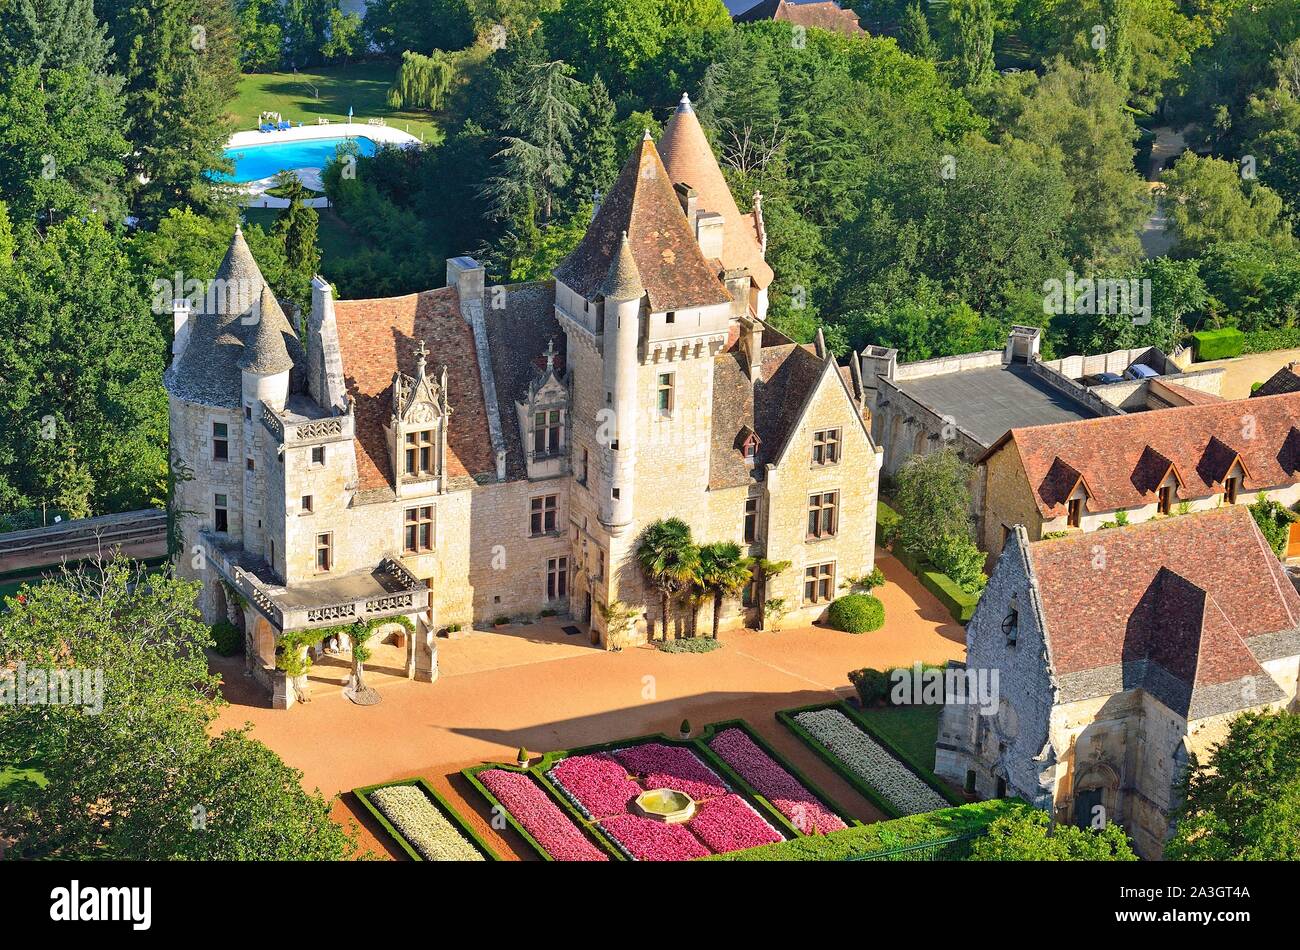 France, Dordogne, Perigord Noir, Dordogne Valley, Castelnaud la Chapelle, Chateau des Milandes, the French american dancer Josephine Baker's former property (aerial view) Stock Photo